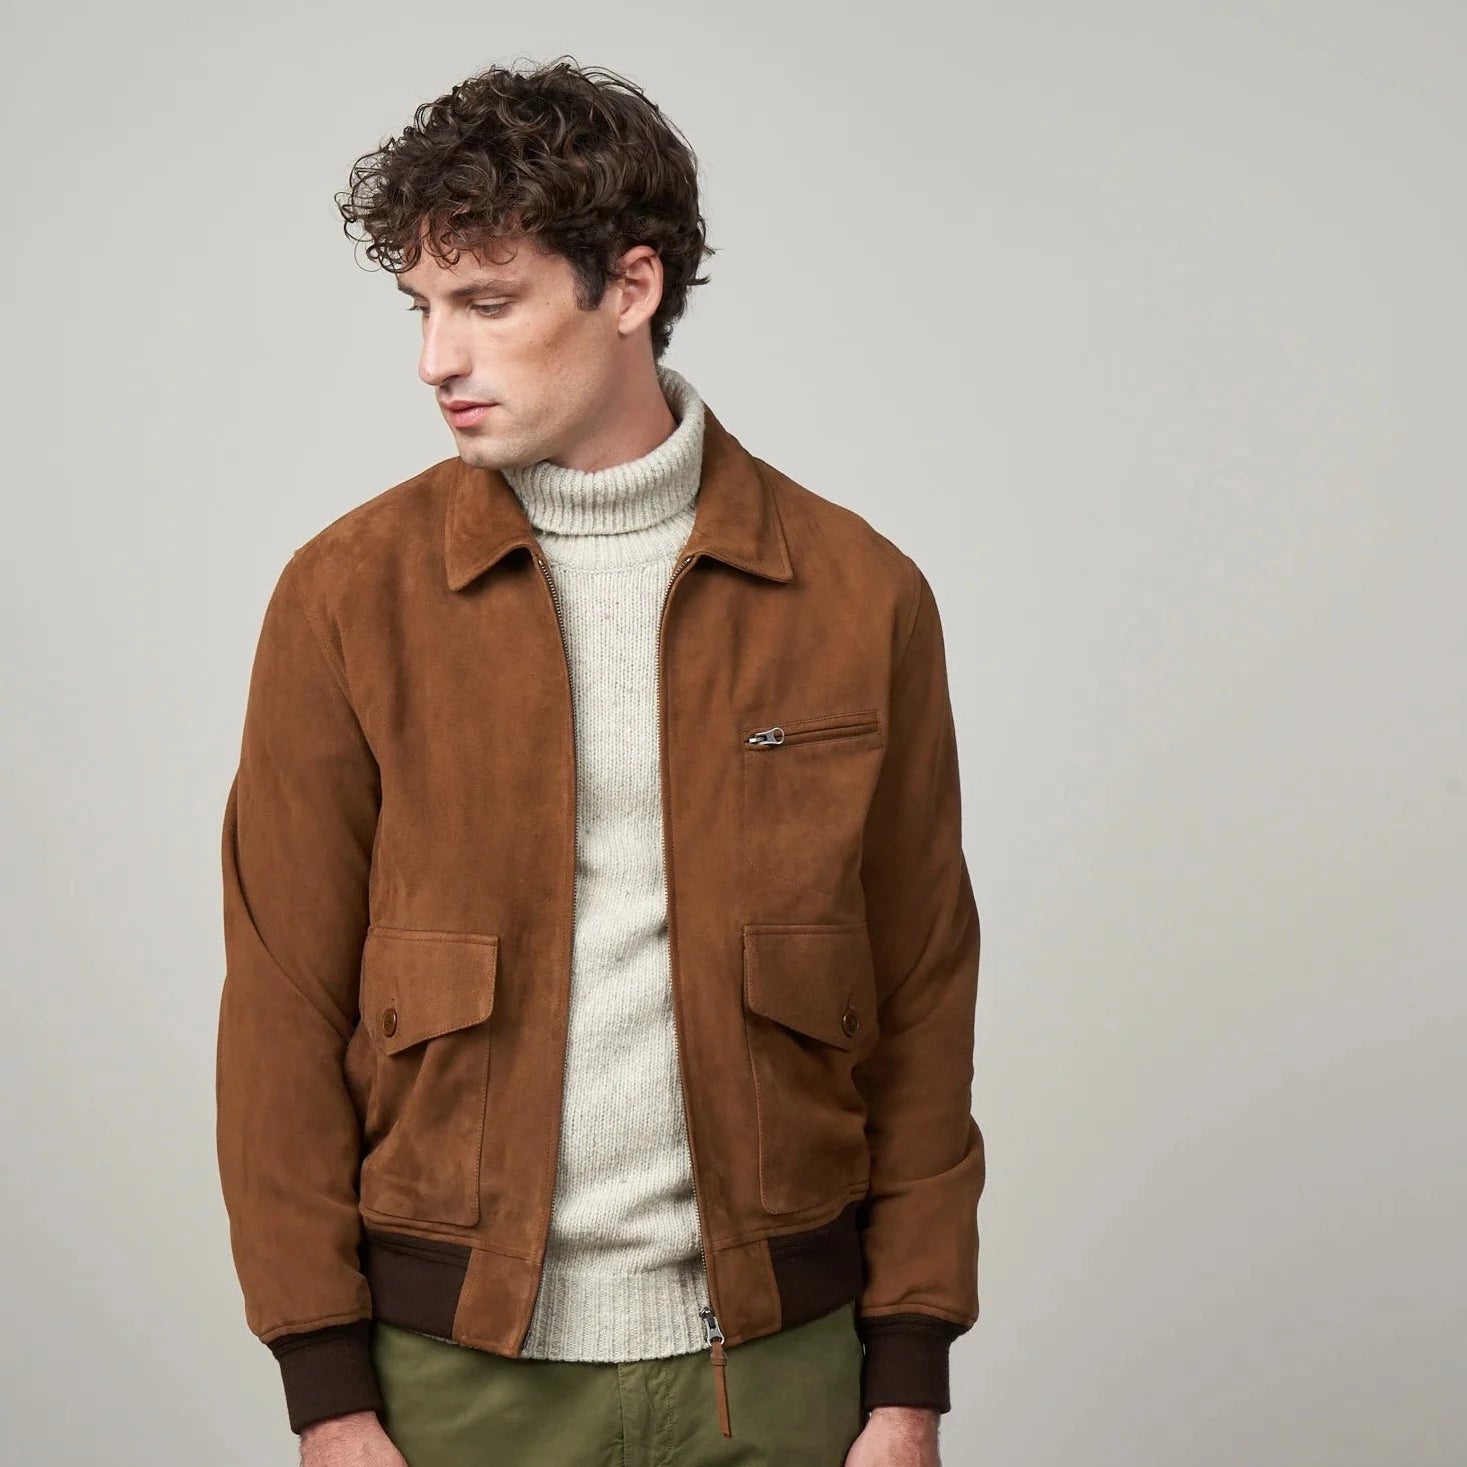 Suede Brown Jacket - Chest Zip - large waist pockets - shirt collar zip up